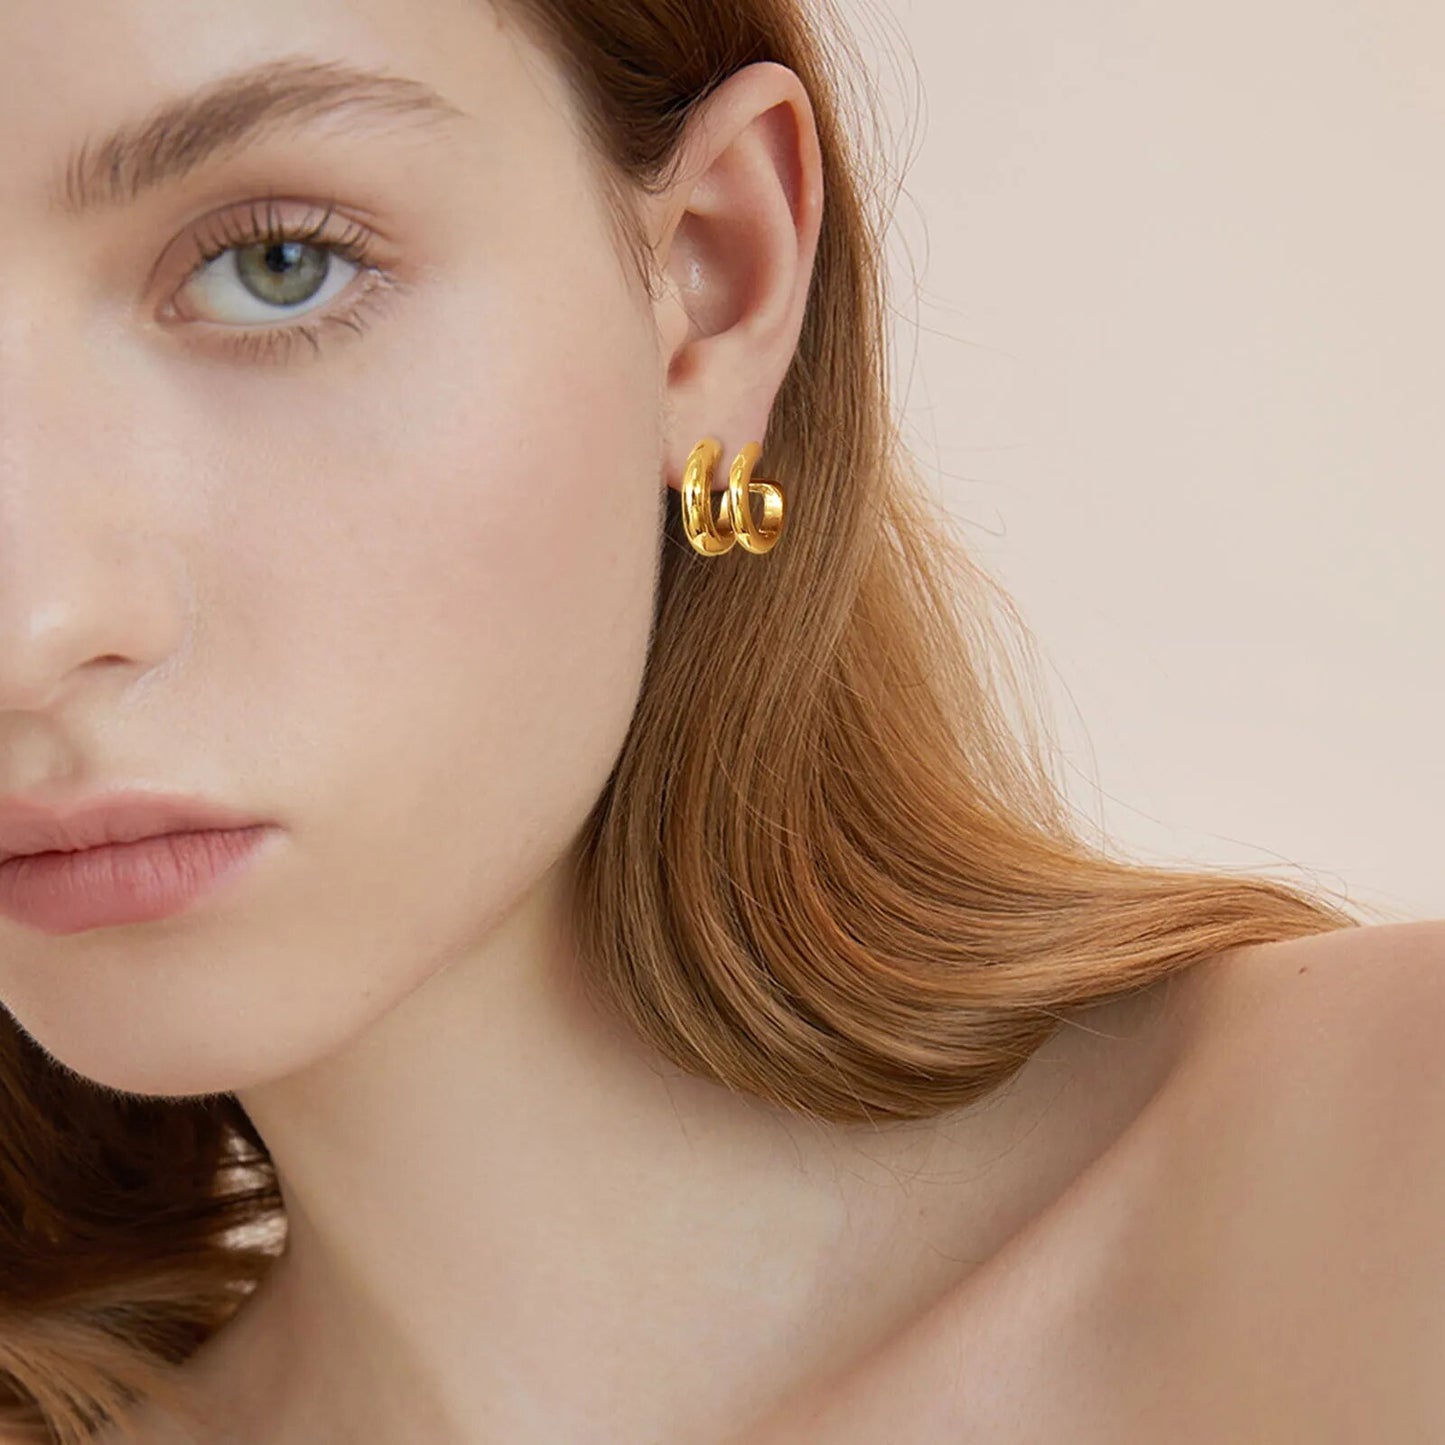 Women's Earrings Aretes para mujeres Women C Shaped Earrings, Gold Color Anti Allergy Stainless Steel Hoops, Chic Minimalist Metal Ear Jewelry